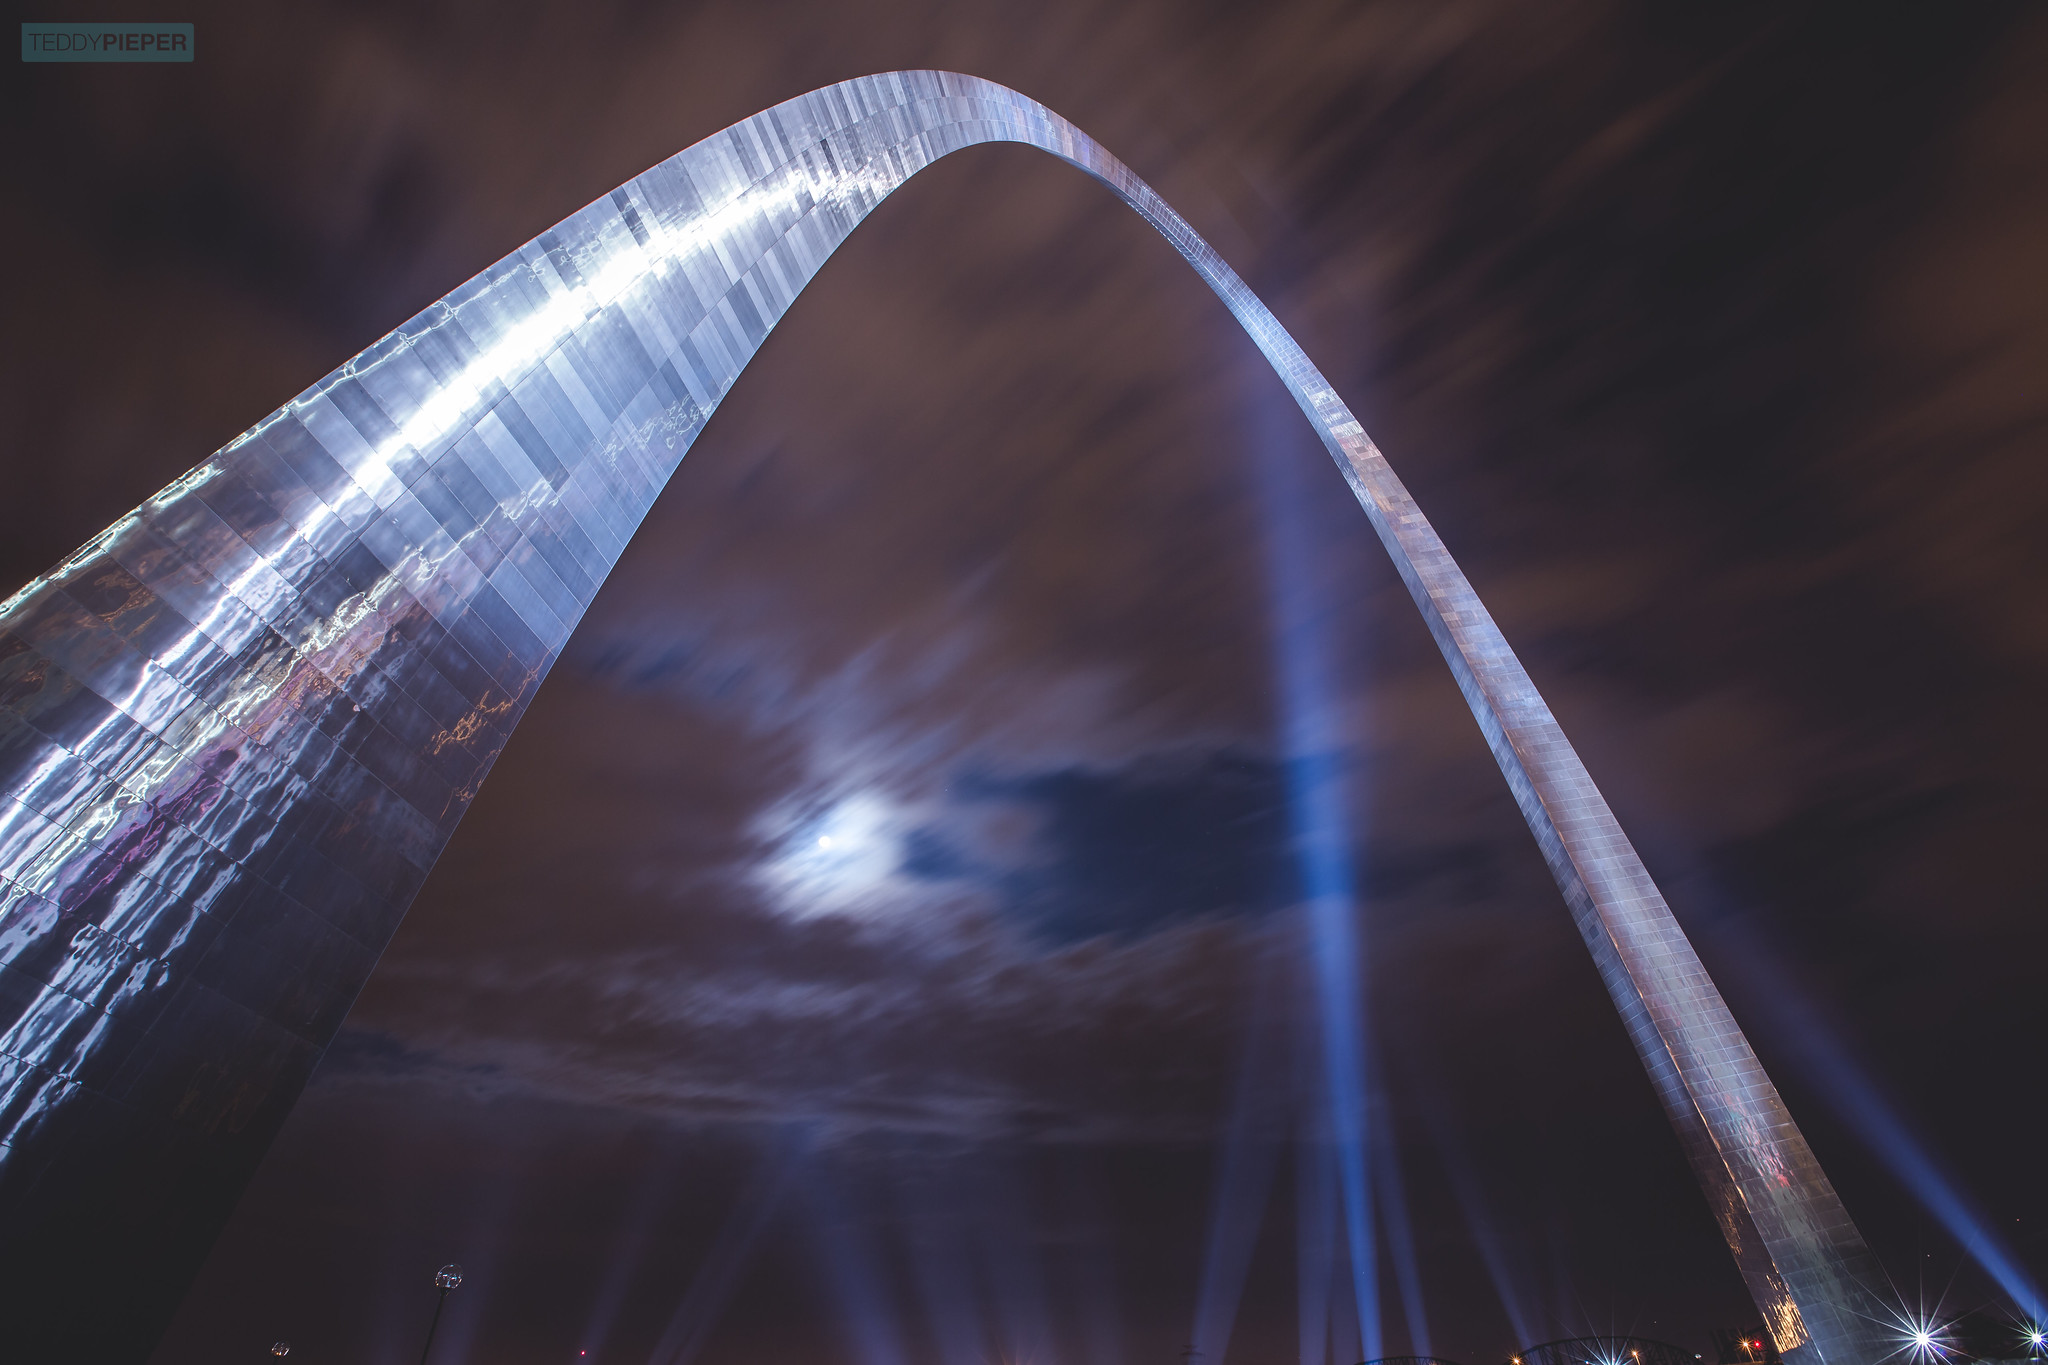 St. Louis Gateway Arch |Teddy Pieper Photography & Design